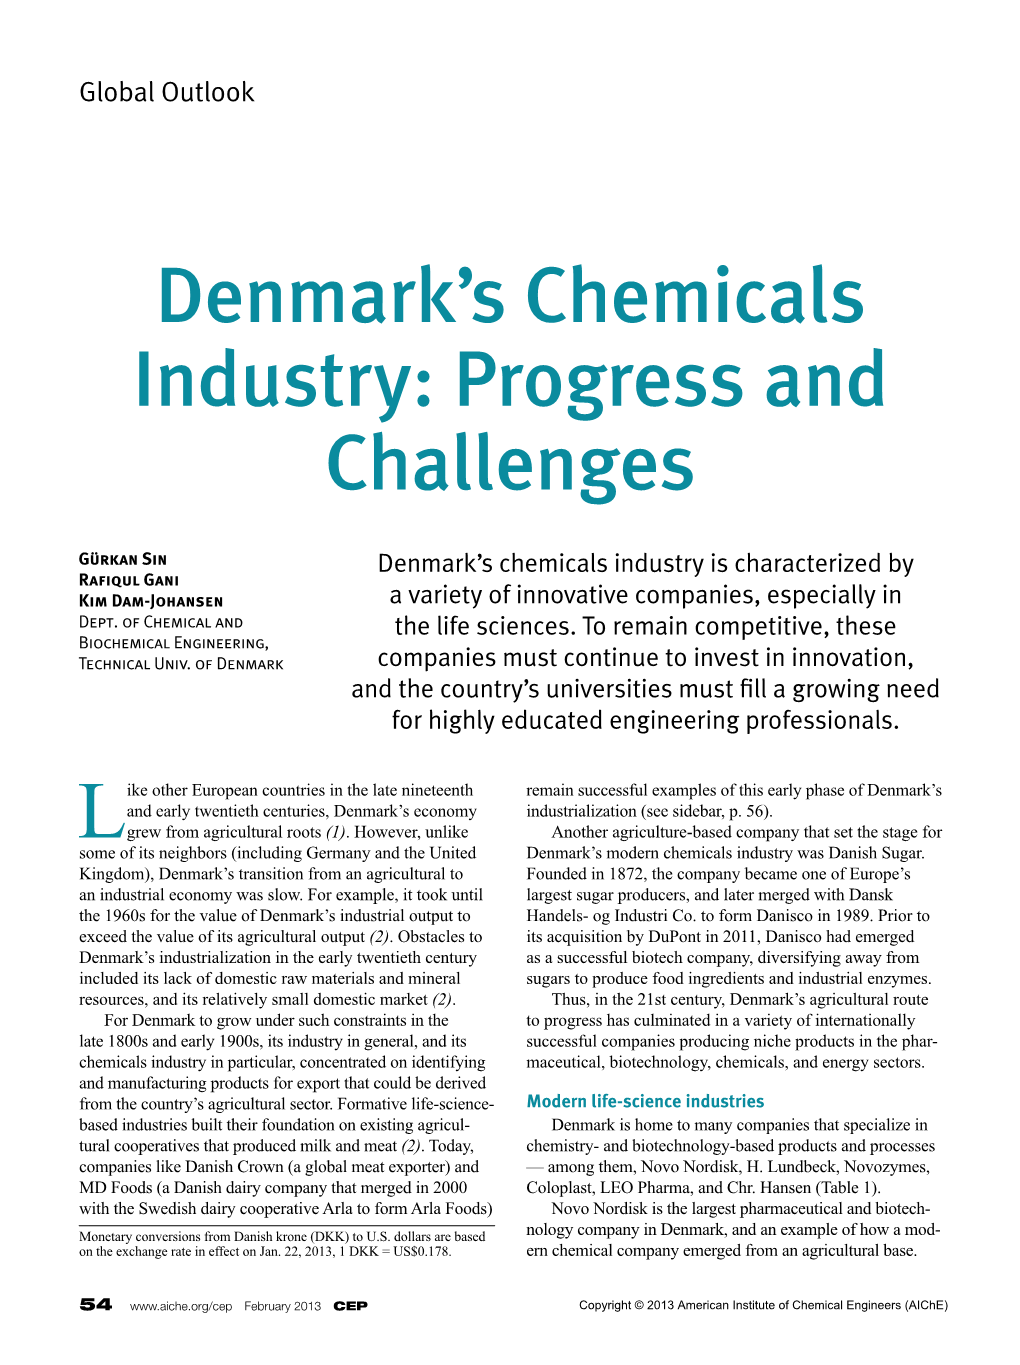 Denmark's Chemicals Industry